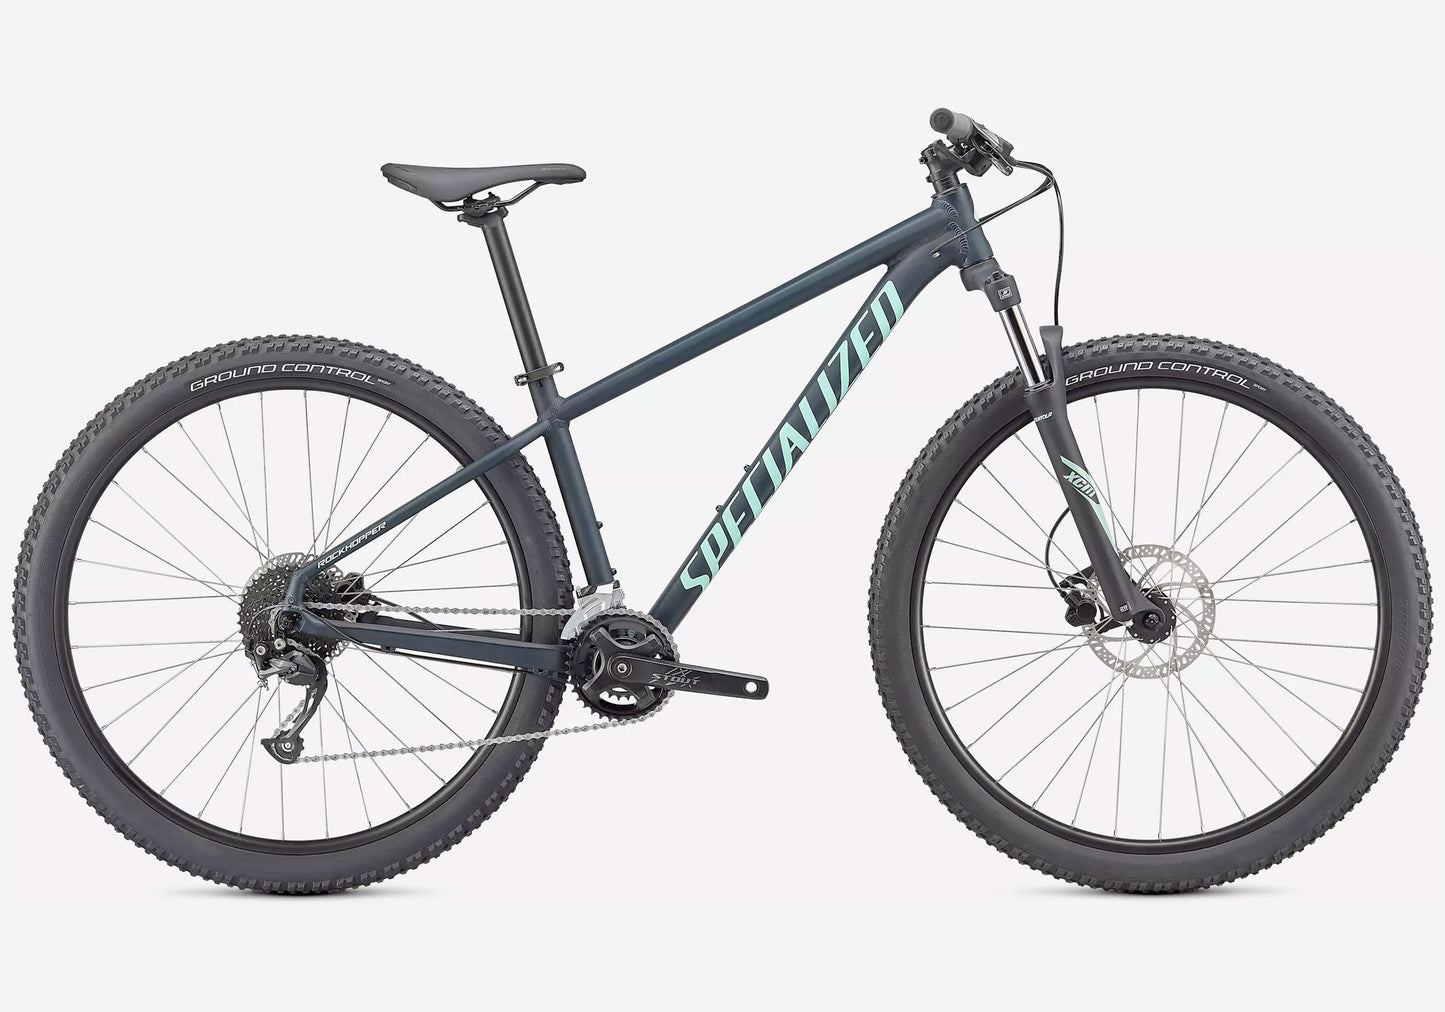 Specialized Rockhopper Sport 27.5 Unisex Mountain Bike - Satin Forest Green